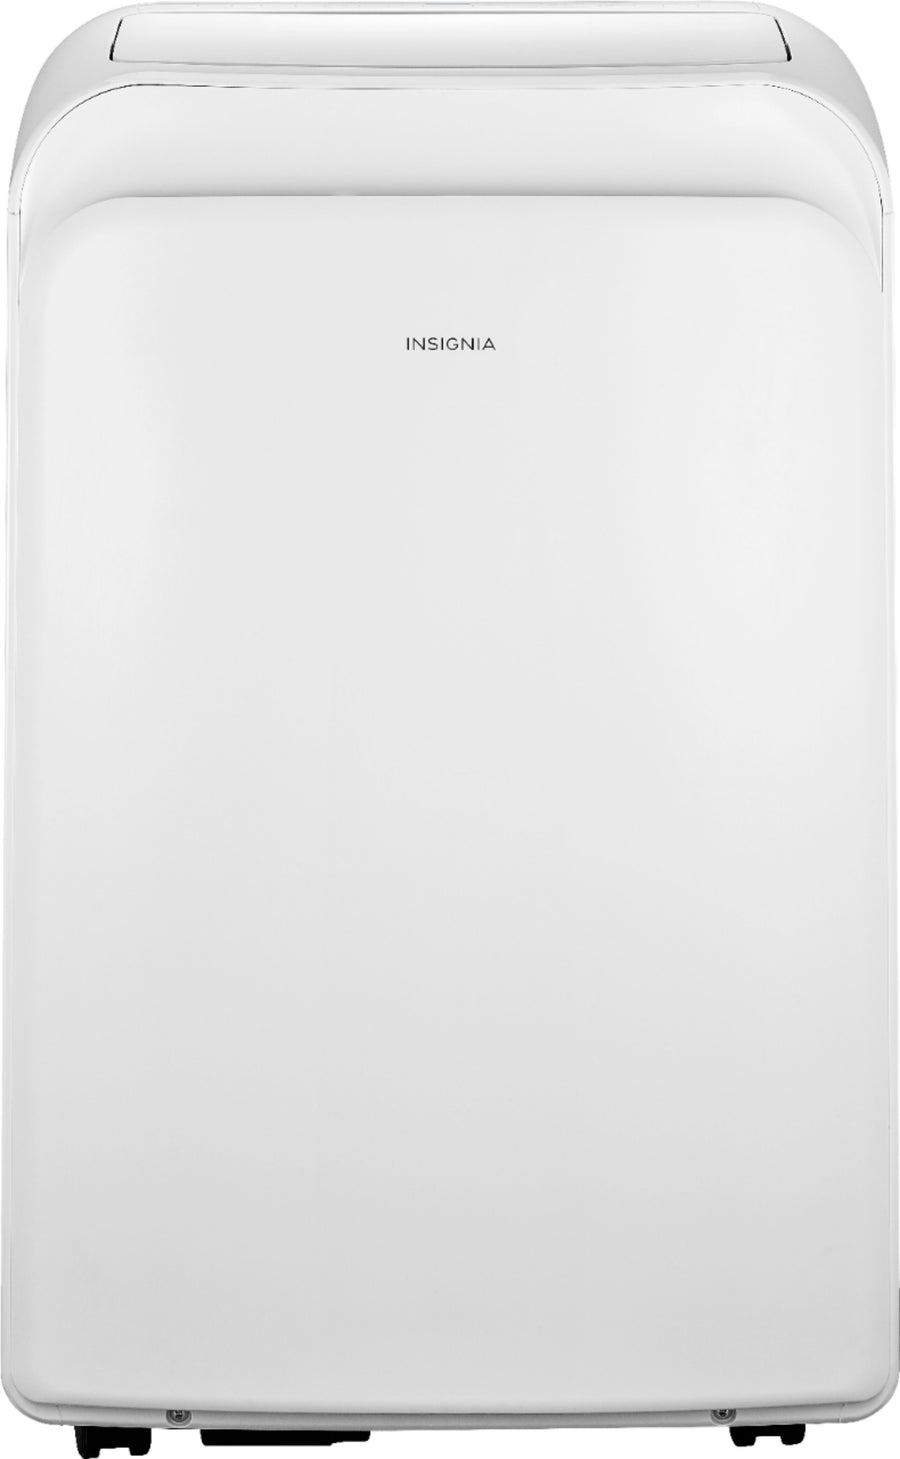 Insignia™ - 250 Sq. Ft. Portable Air Conditioner - White_0